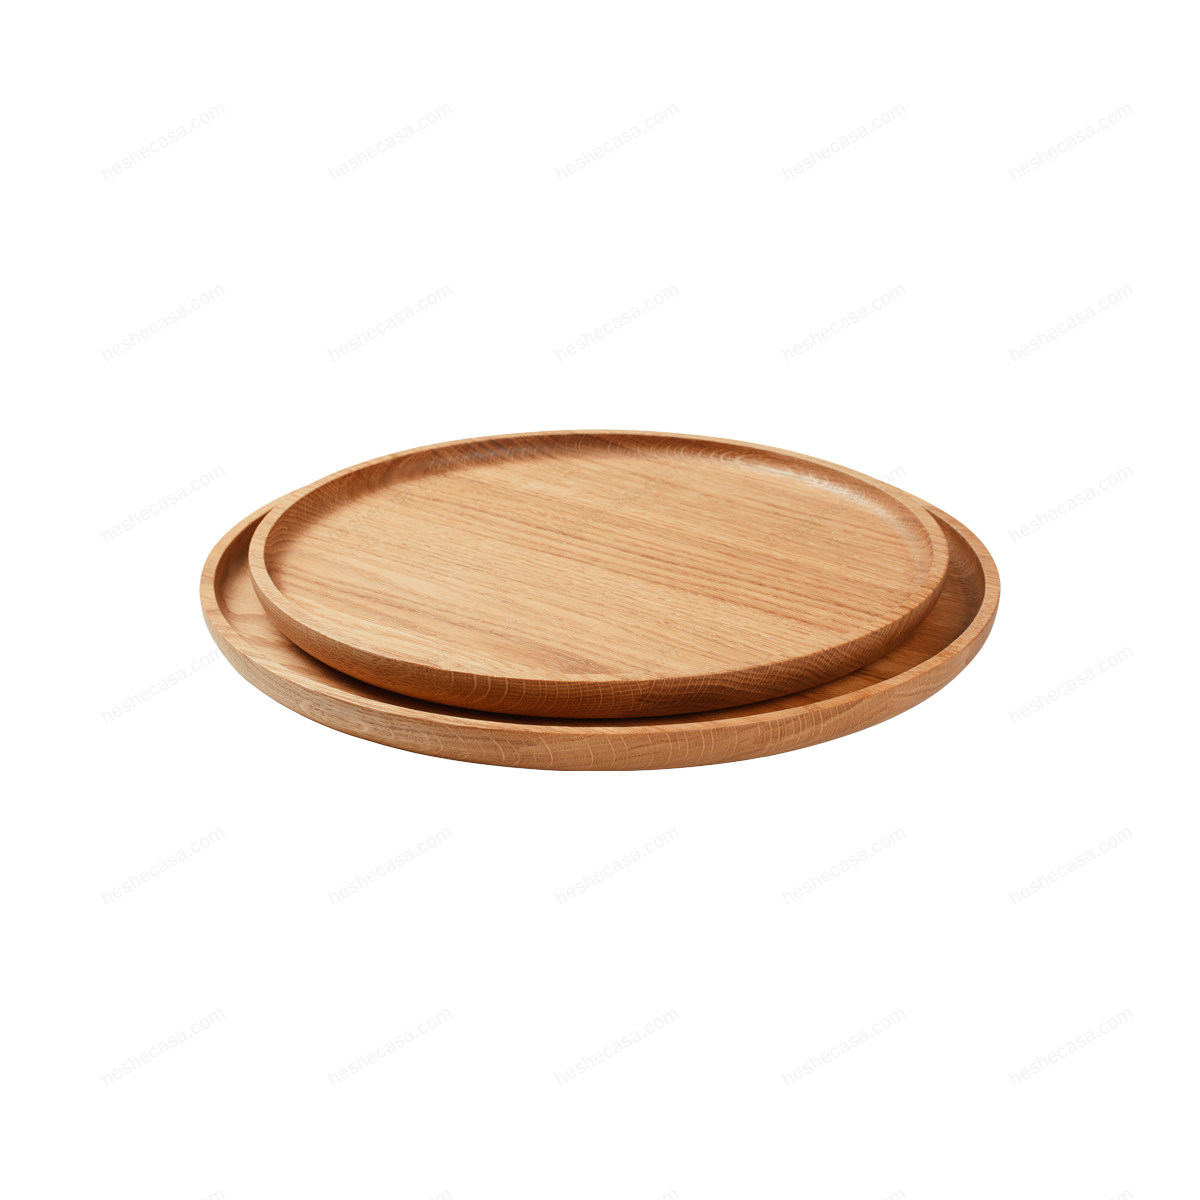 Bm0703 Wooden Plate 盘子